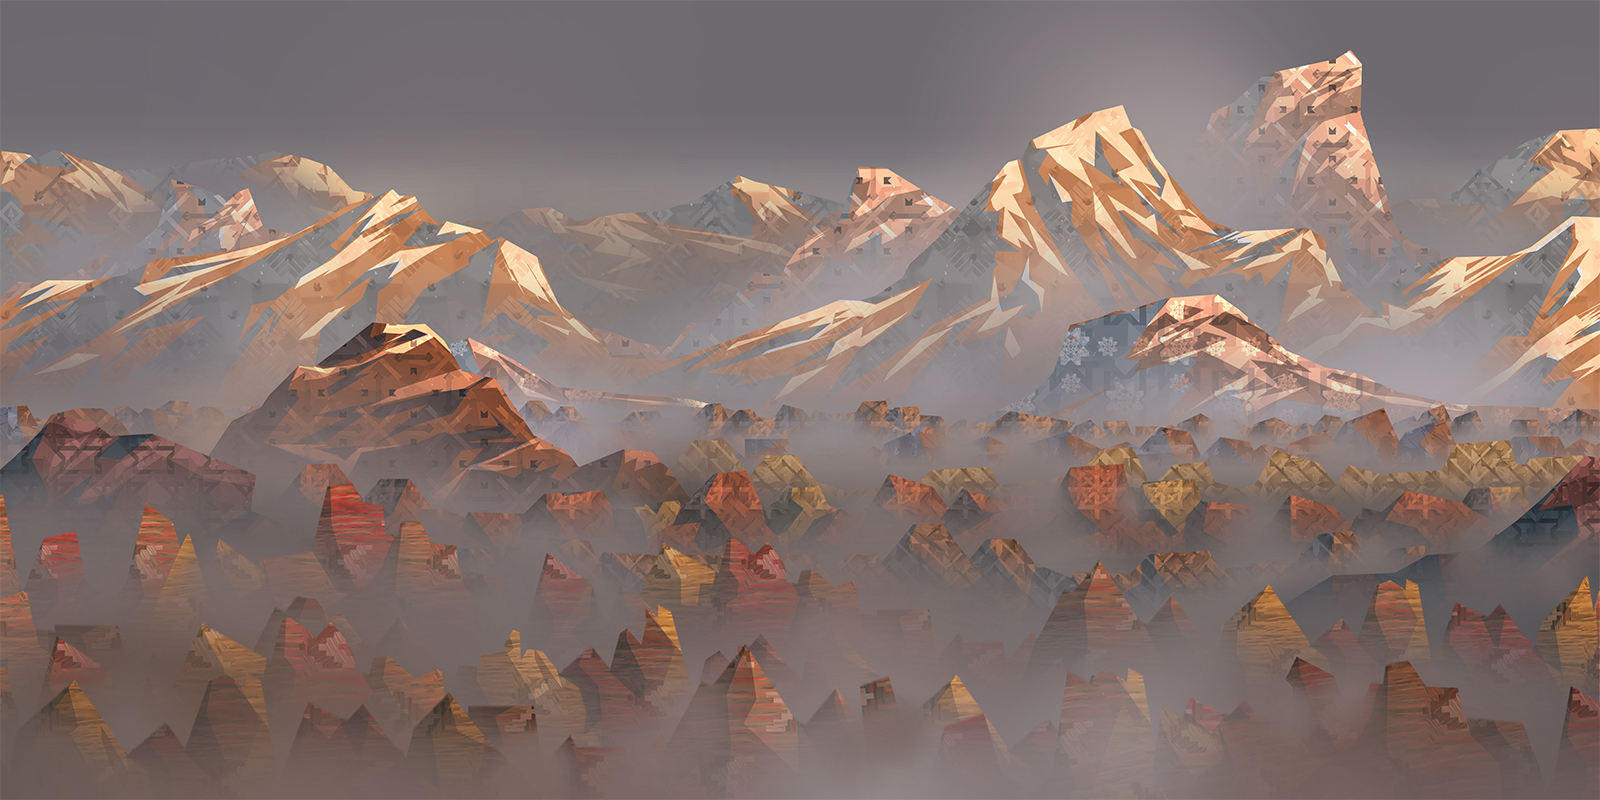 Shelter 2 Mountains screenshot